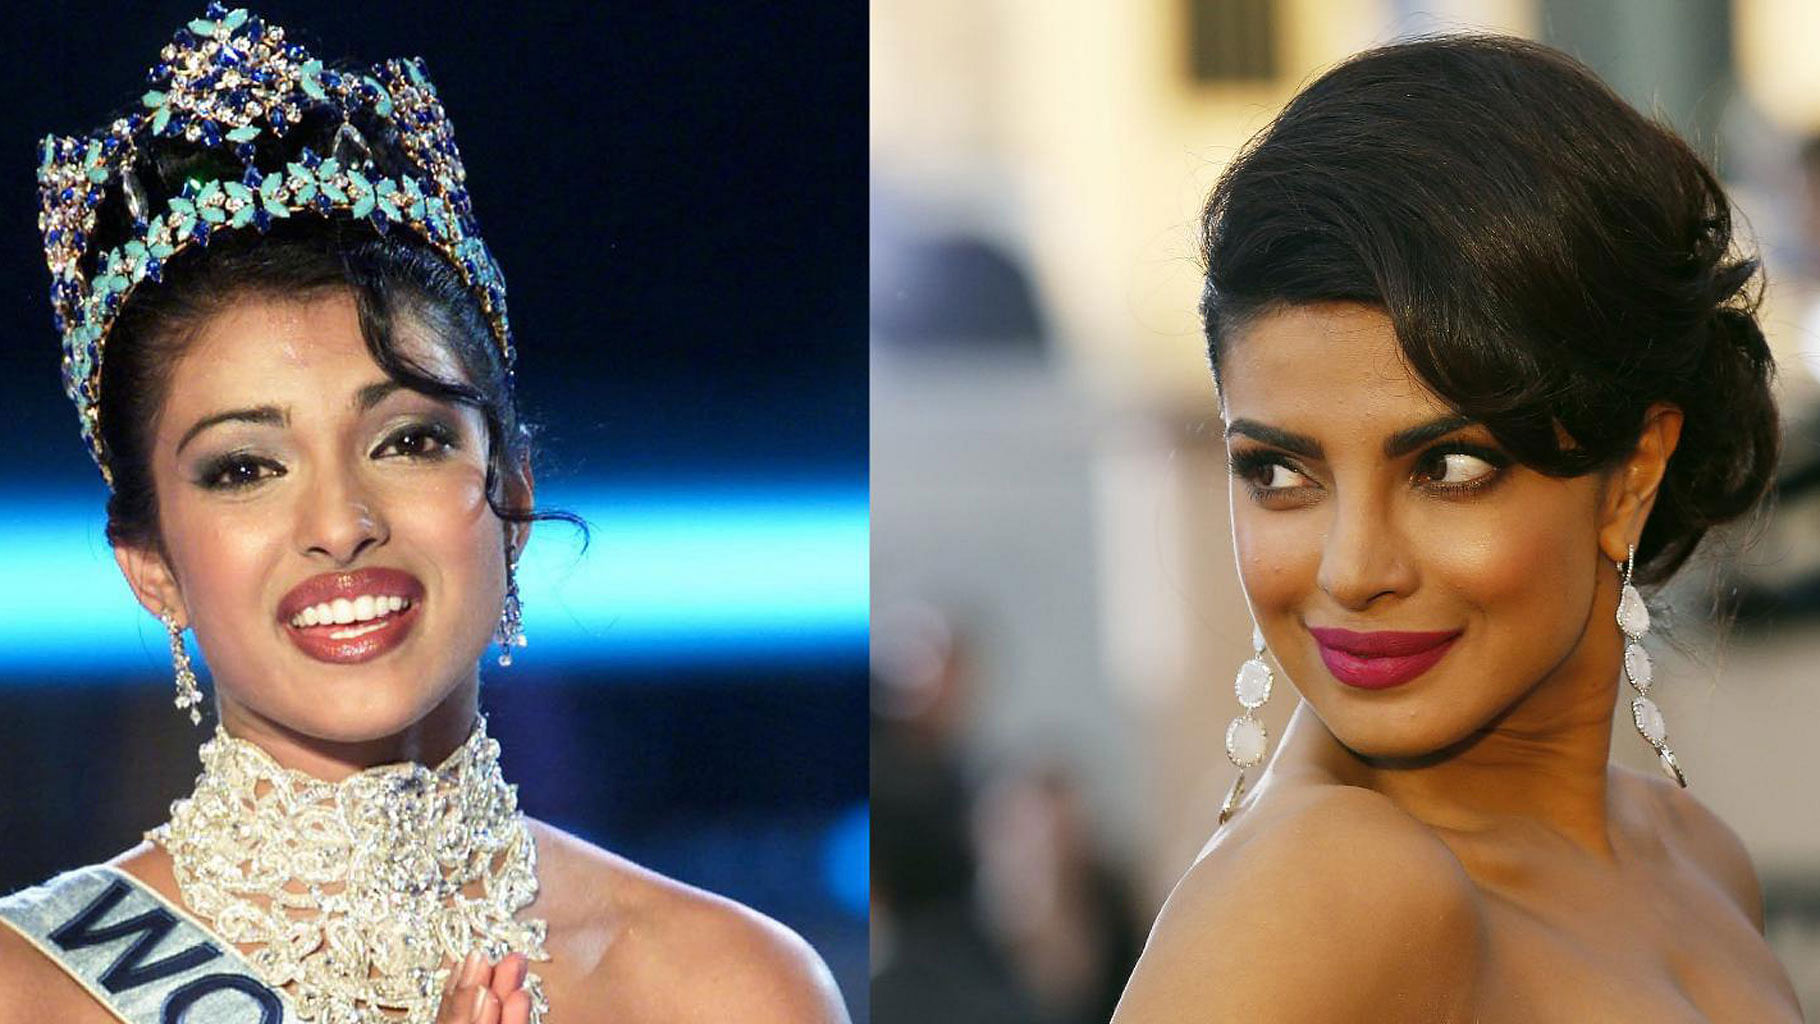 Priyanka Chopra at the Miss World pageant in 2000 and at the SAG awards in 2016 (Photos: Reuters)